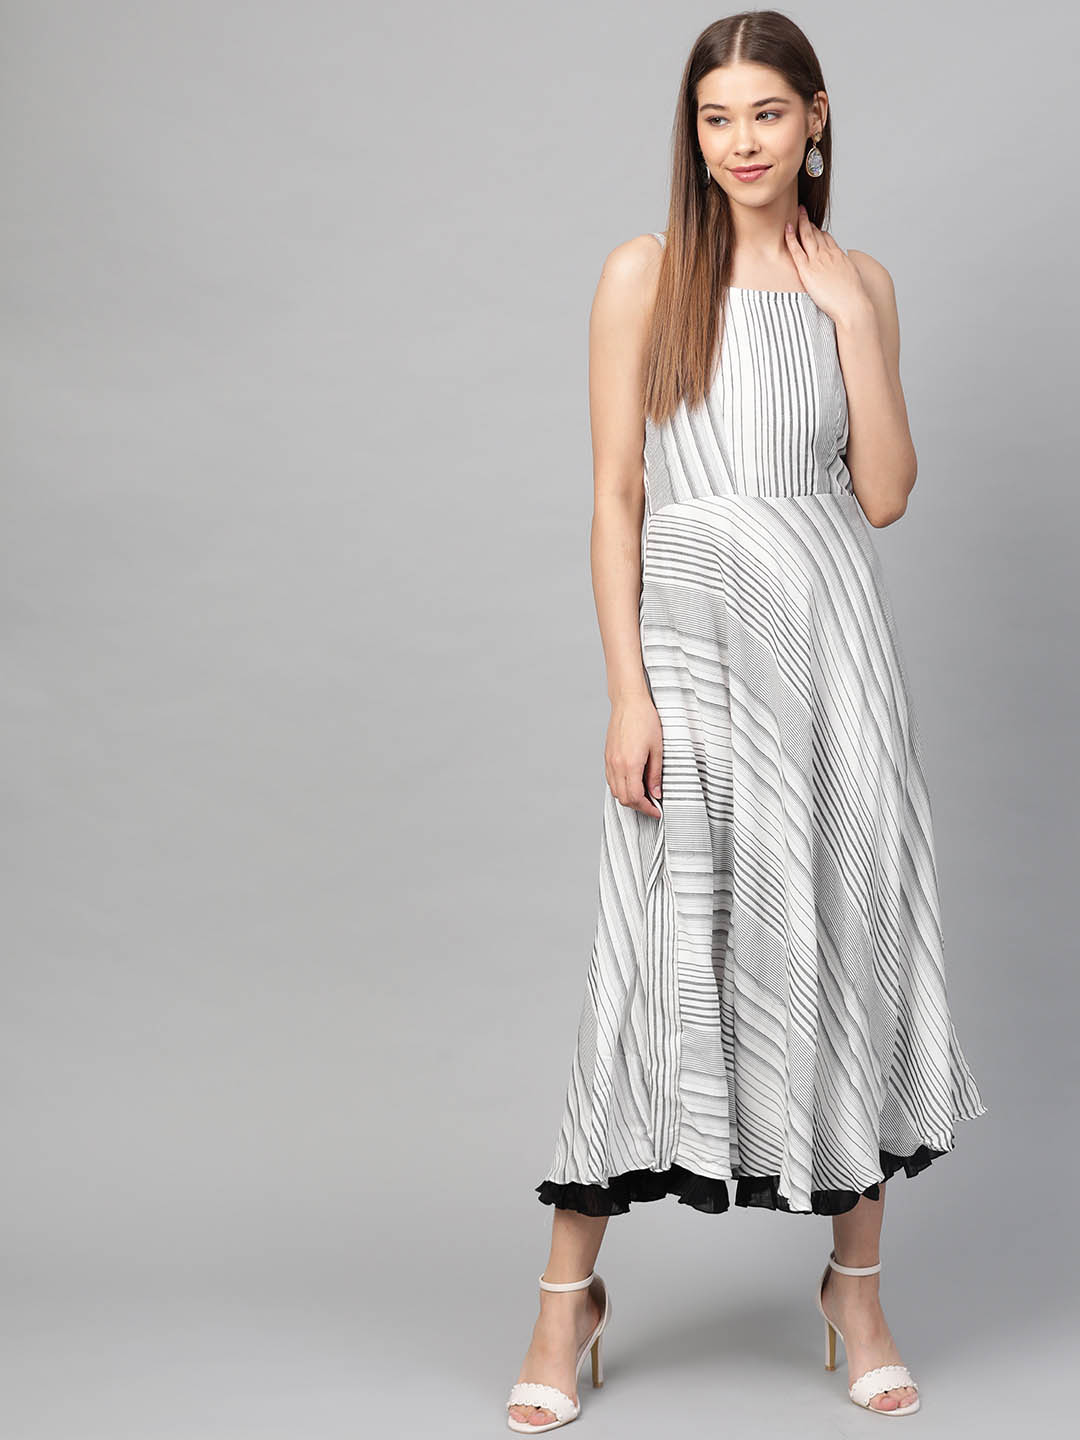 White & Black Striped Maxi Dress With Shrug